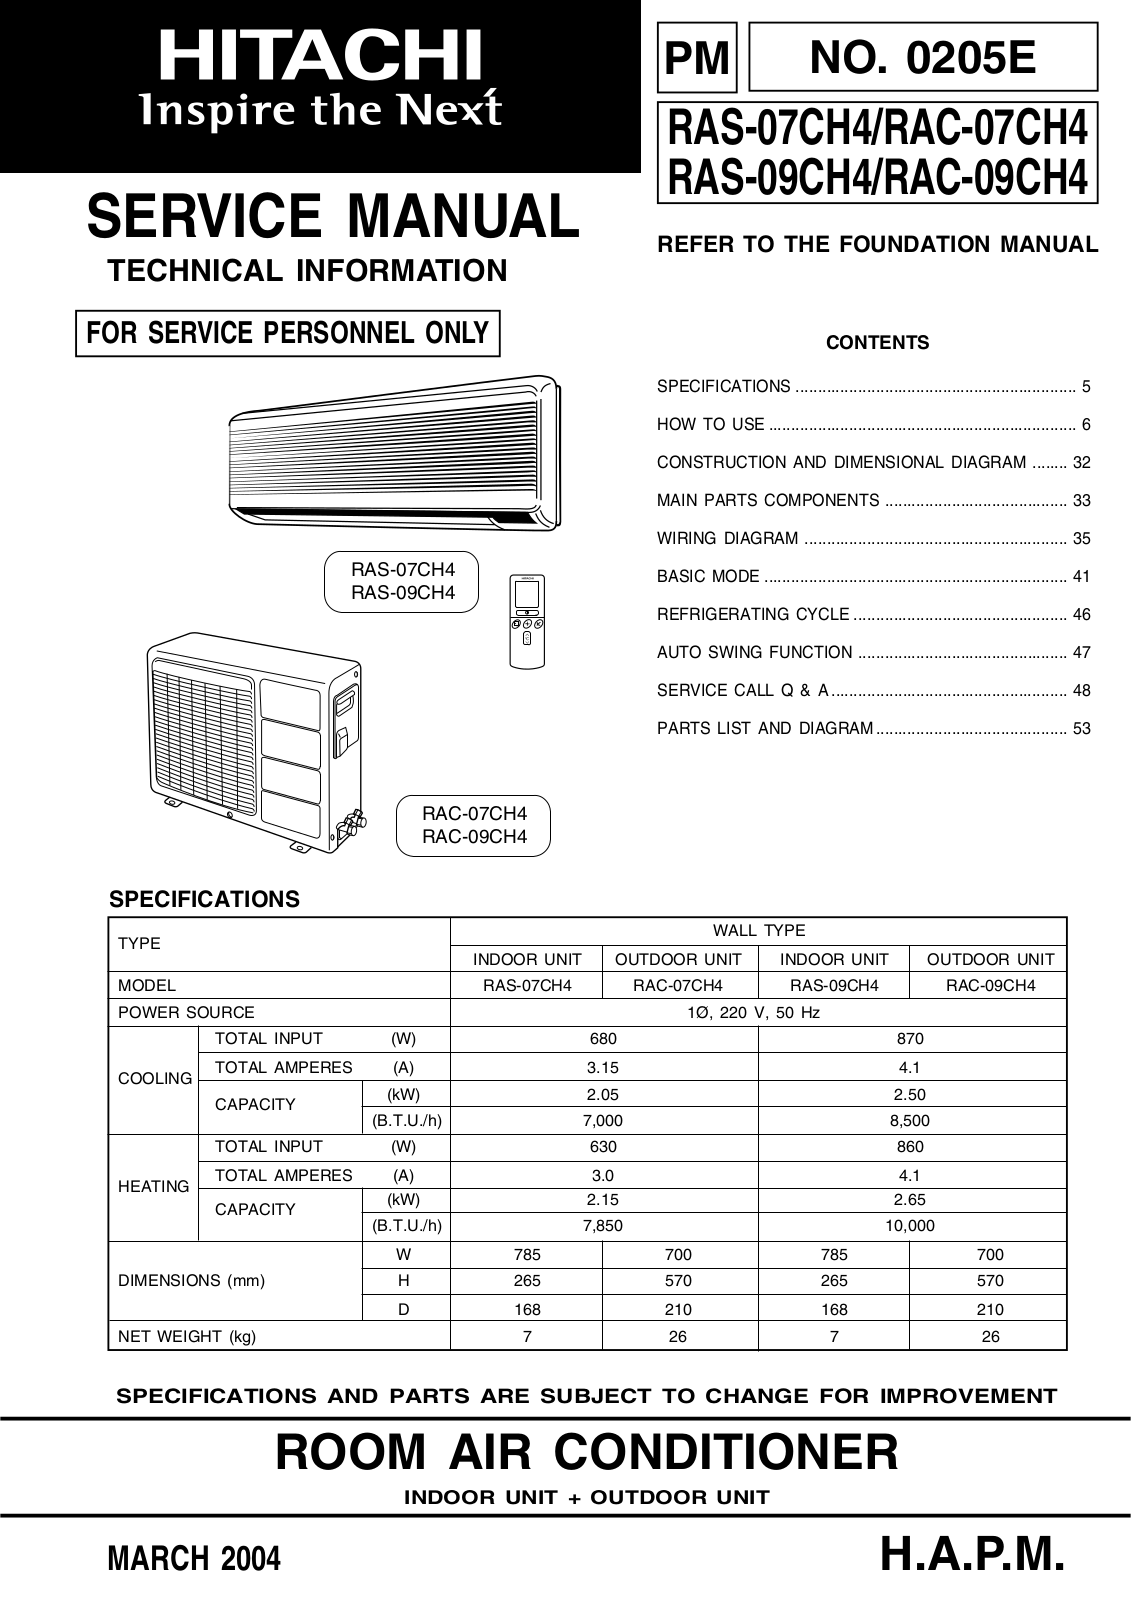 Hitachi RAS-07CH4, RAS-09CH4 Service manual